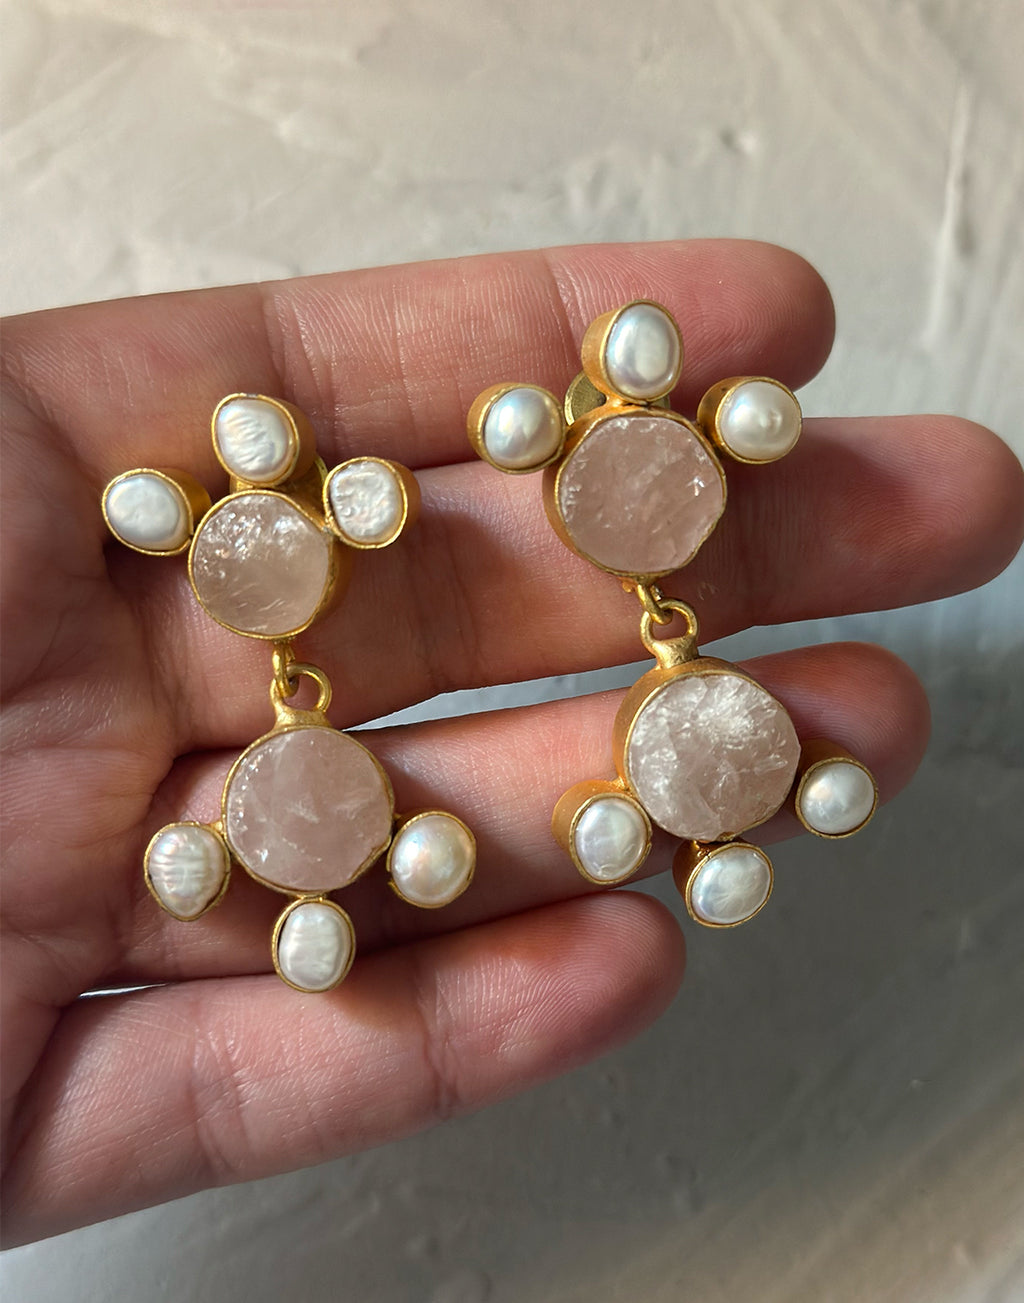 Twin Round Flower Earrings (Rose Quartz) - Statement Earrings - Gold-Plated & Hypoallergenic Jewellery - Made in India - Dubai Jewellery - Dori